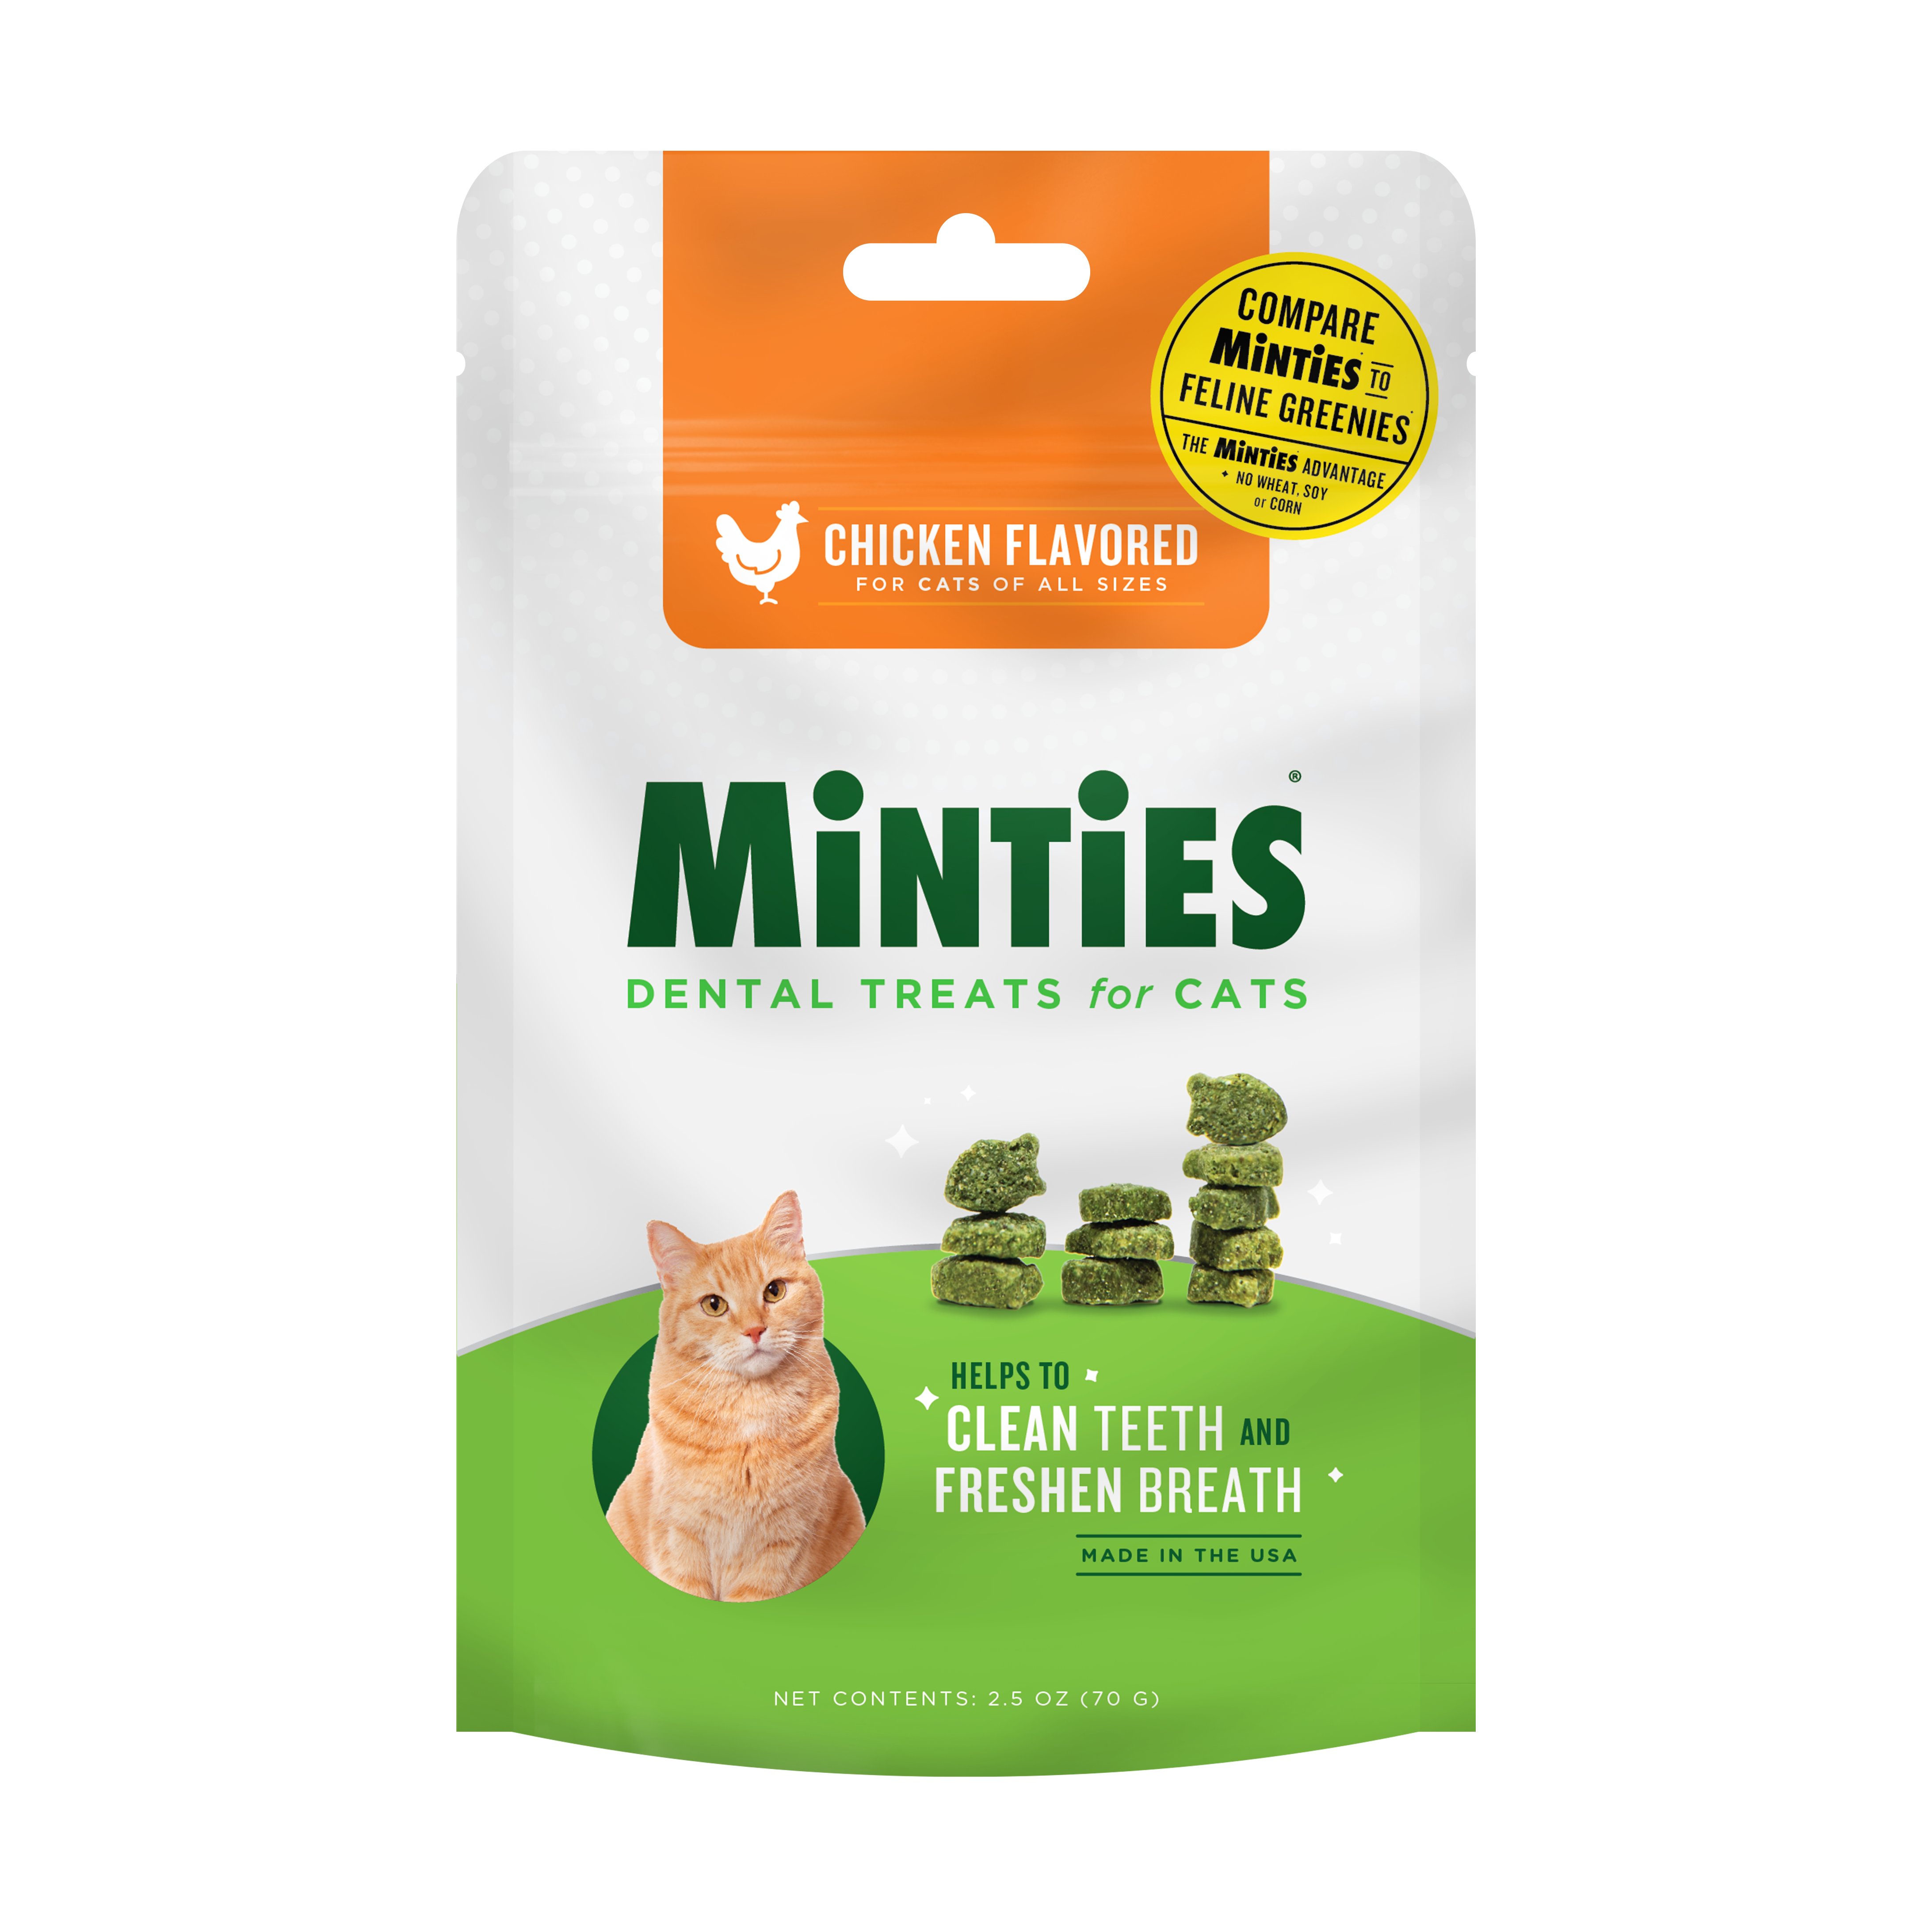 Minties Teeth Cleaner Dental Cat Treats, Chicken Flavored, 2.5 oz - image 1 of 7